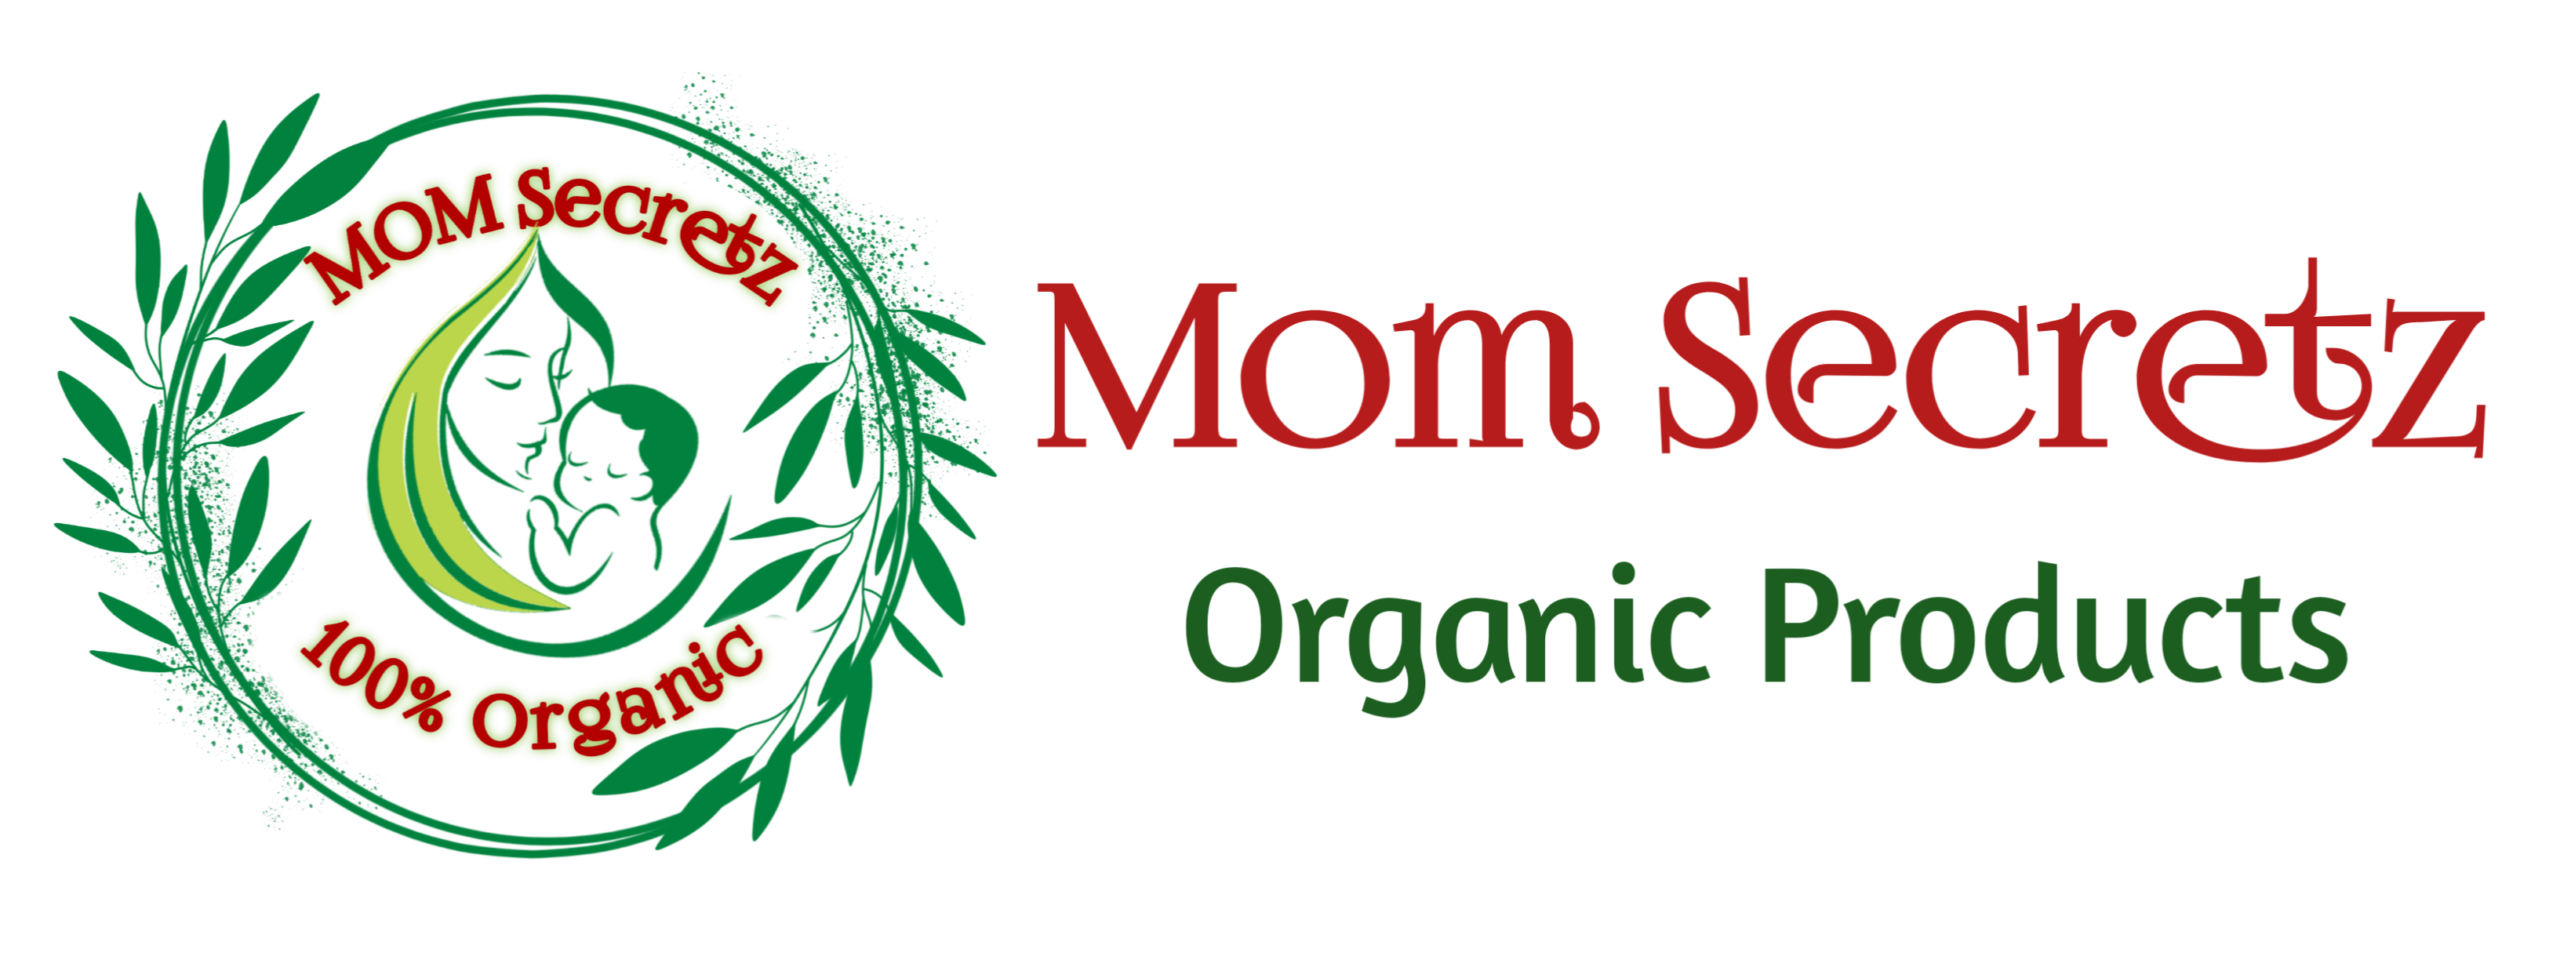 Momsecretz-site-logo